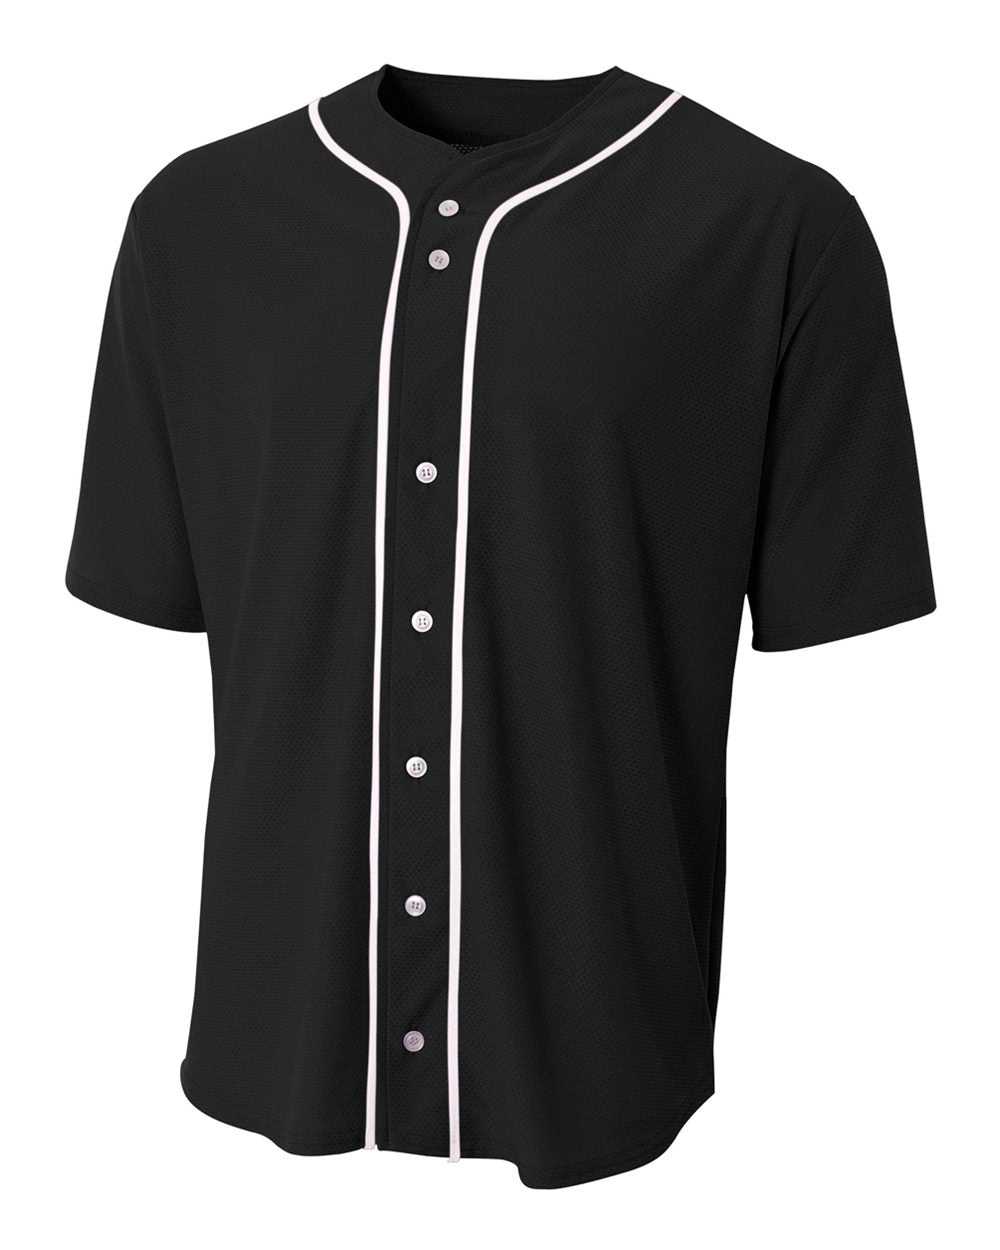 A4 N4184 Short Sleeve Full Button Baseball Top - Black White - HIT a Double